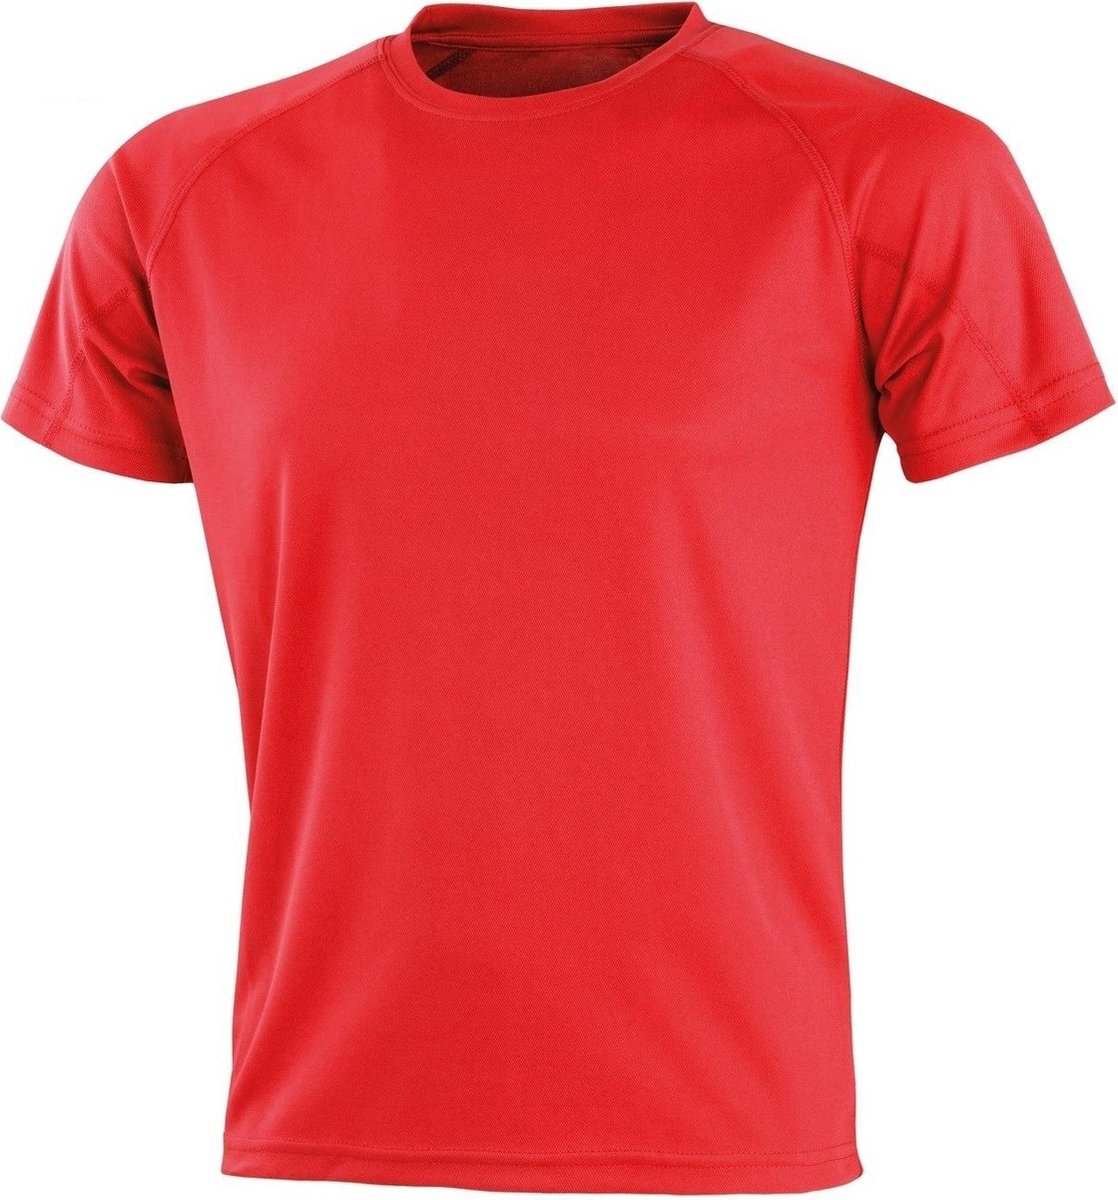 Senvi Sports Performance T-Shirt- Rood - S - Unisex